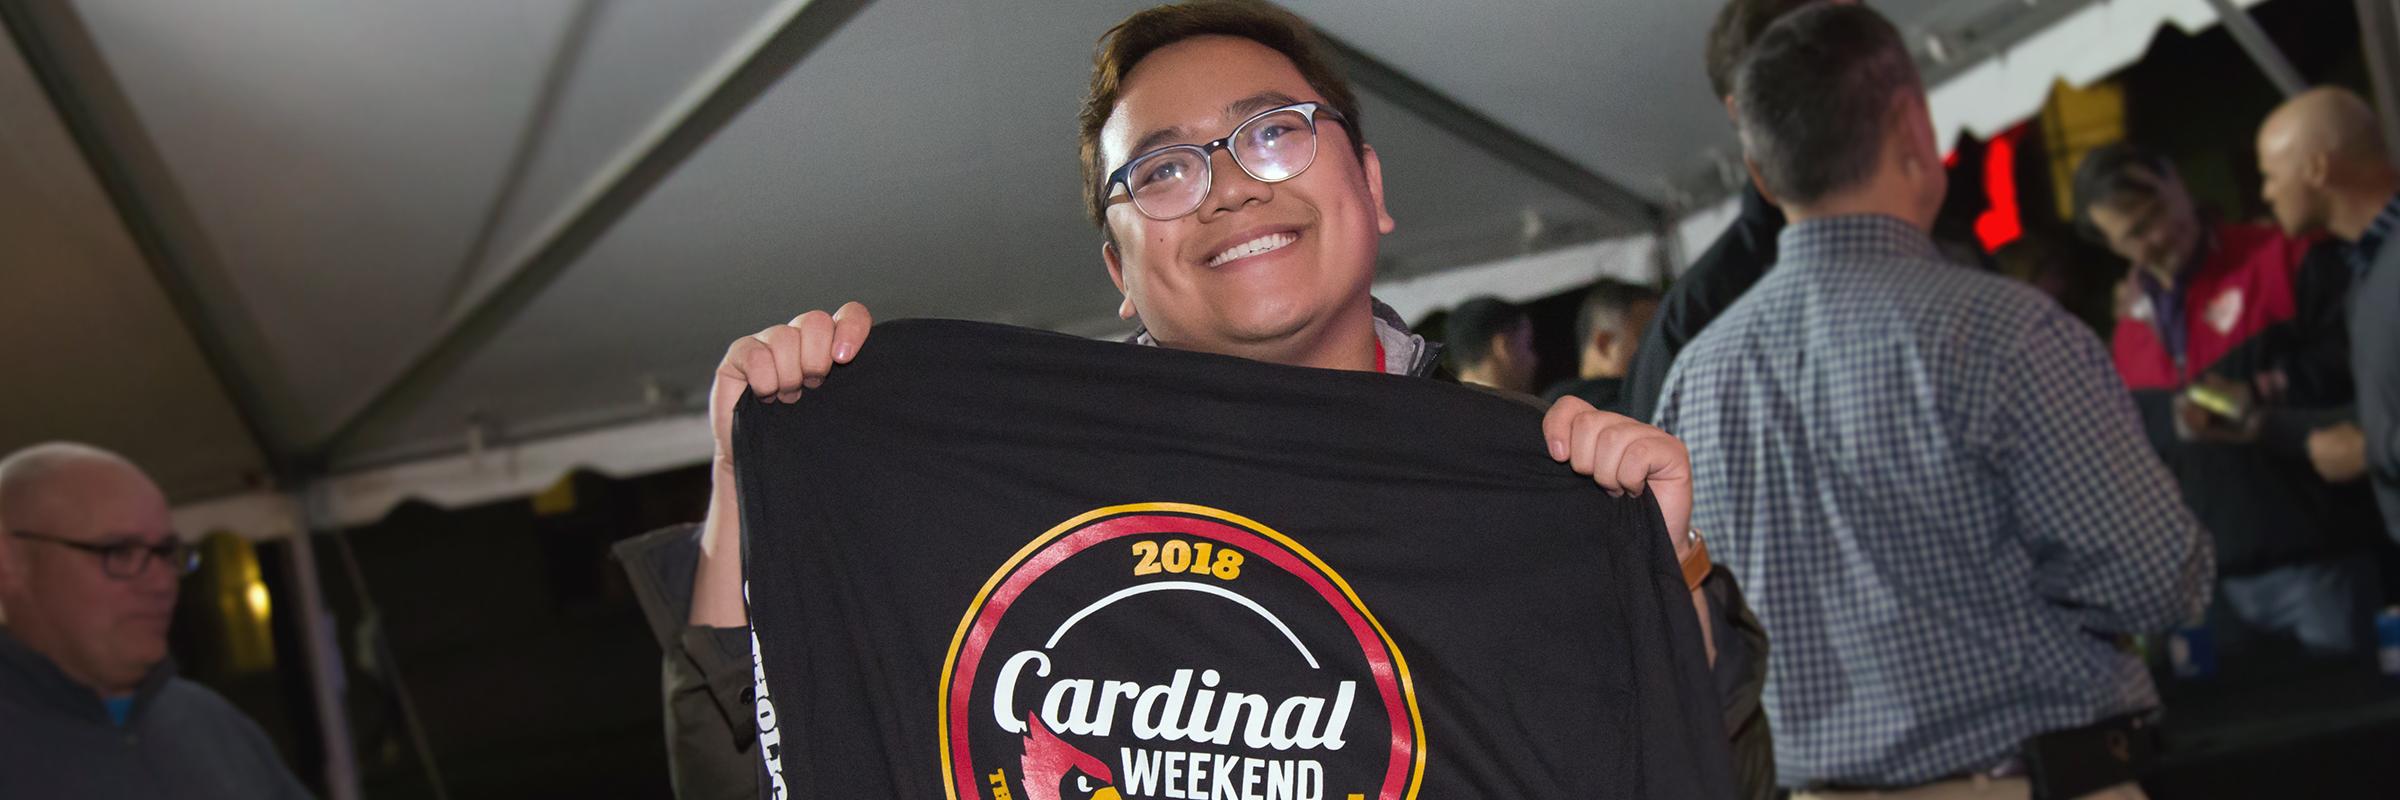 Student selling Cardinal Weekend shirts